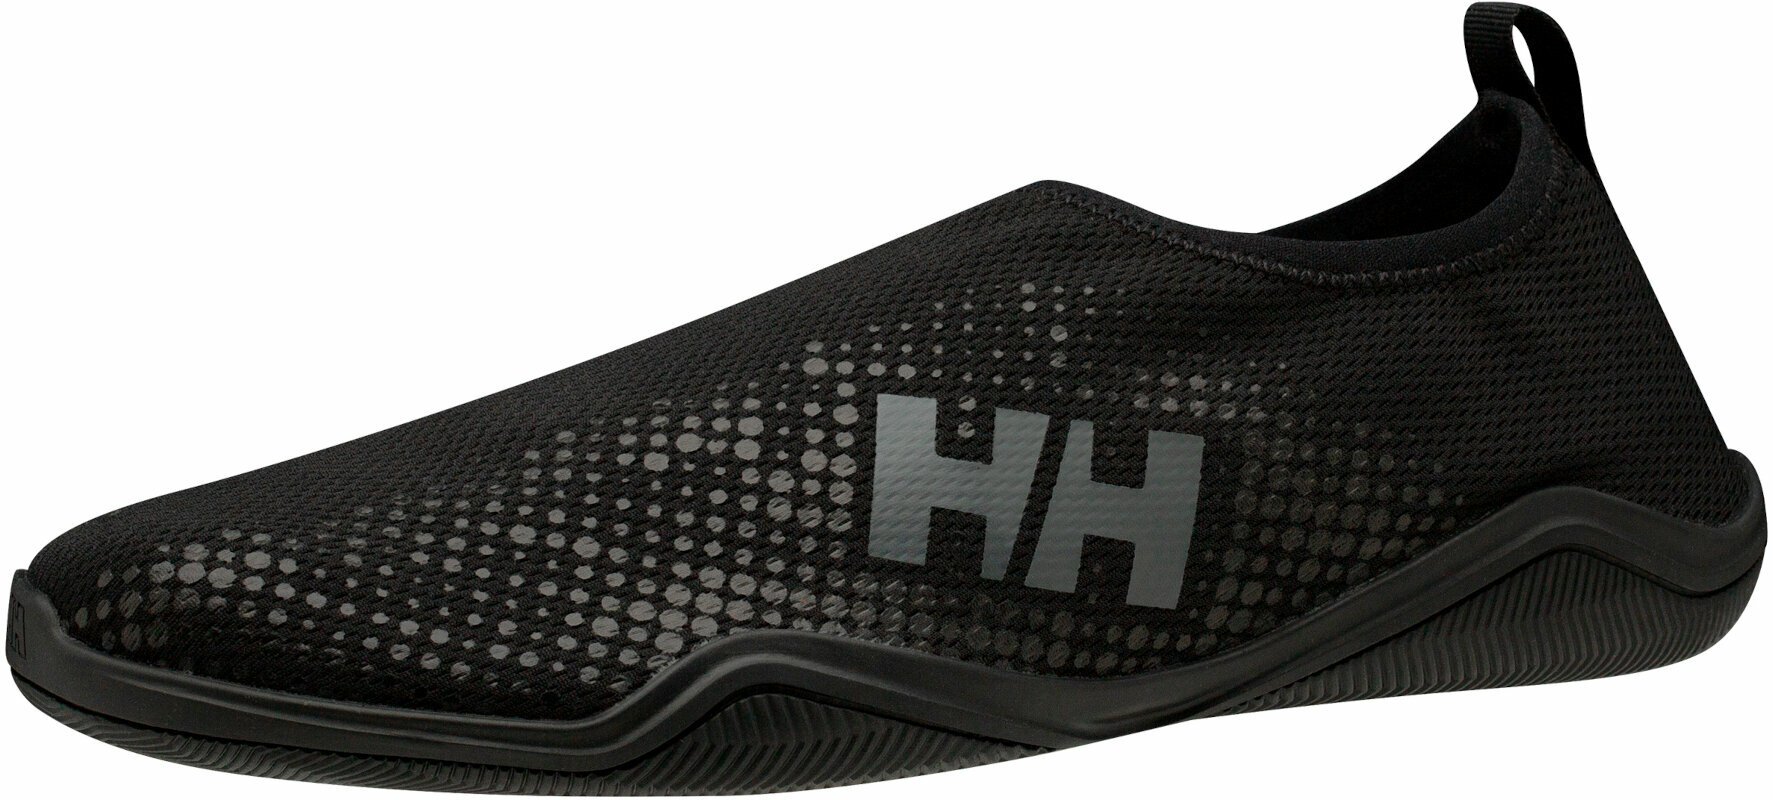 Herrenschuhe Helly Hansen Men's Crest Watermoc Black/Charcoal 46